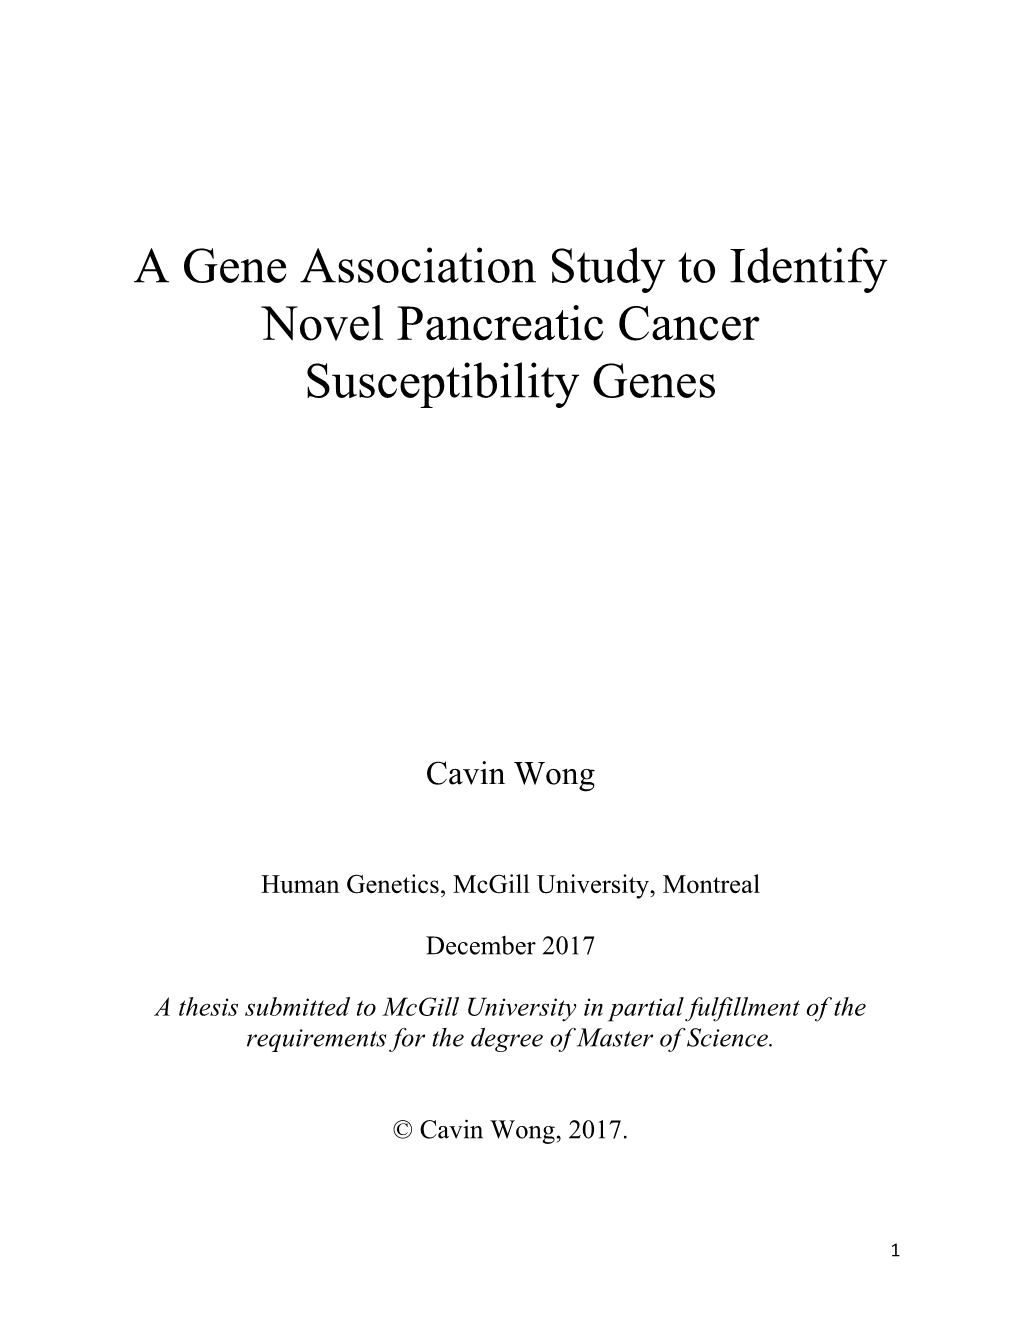 A Gene Association Study to Identify Novel Pancreatic Cancer Susceptibility Genes